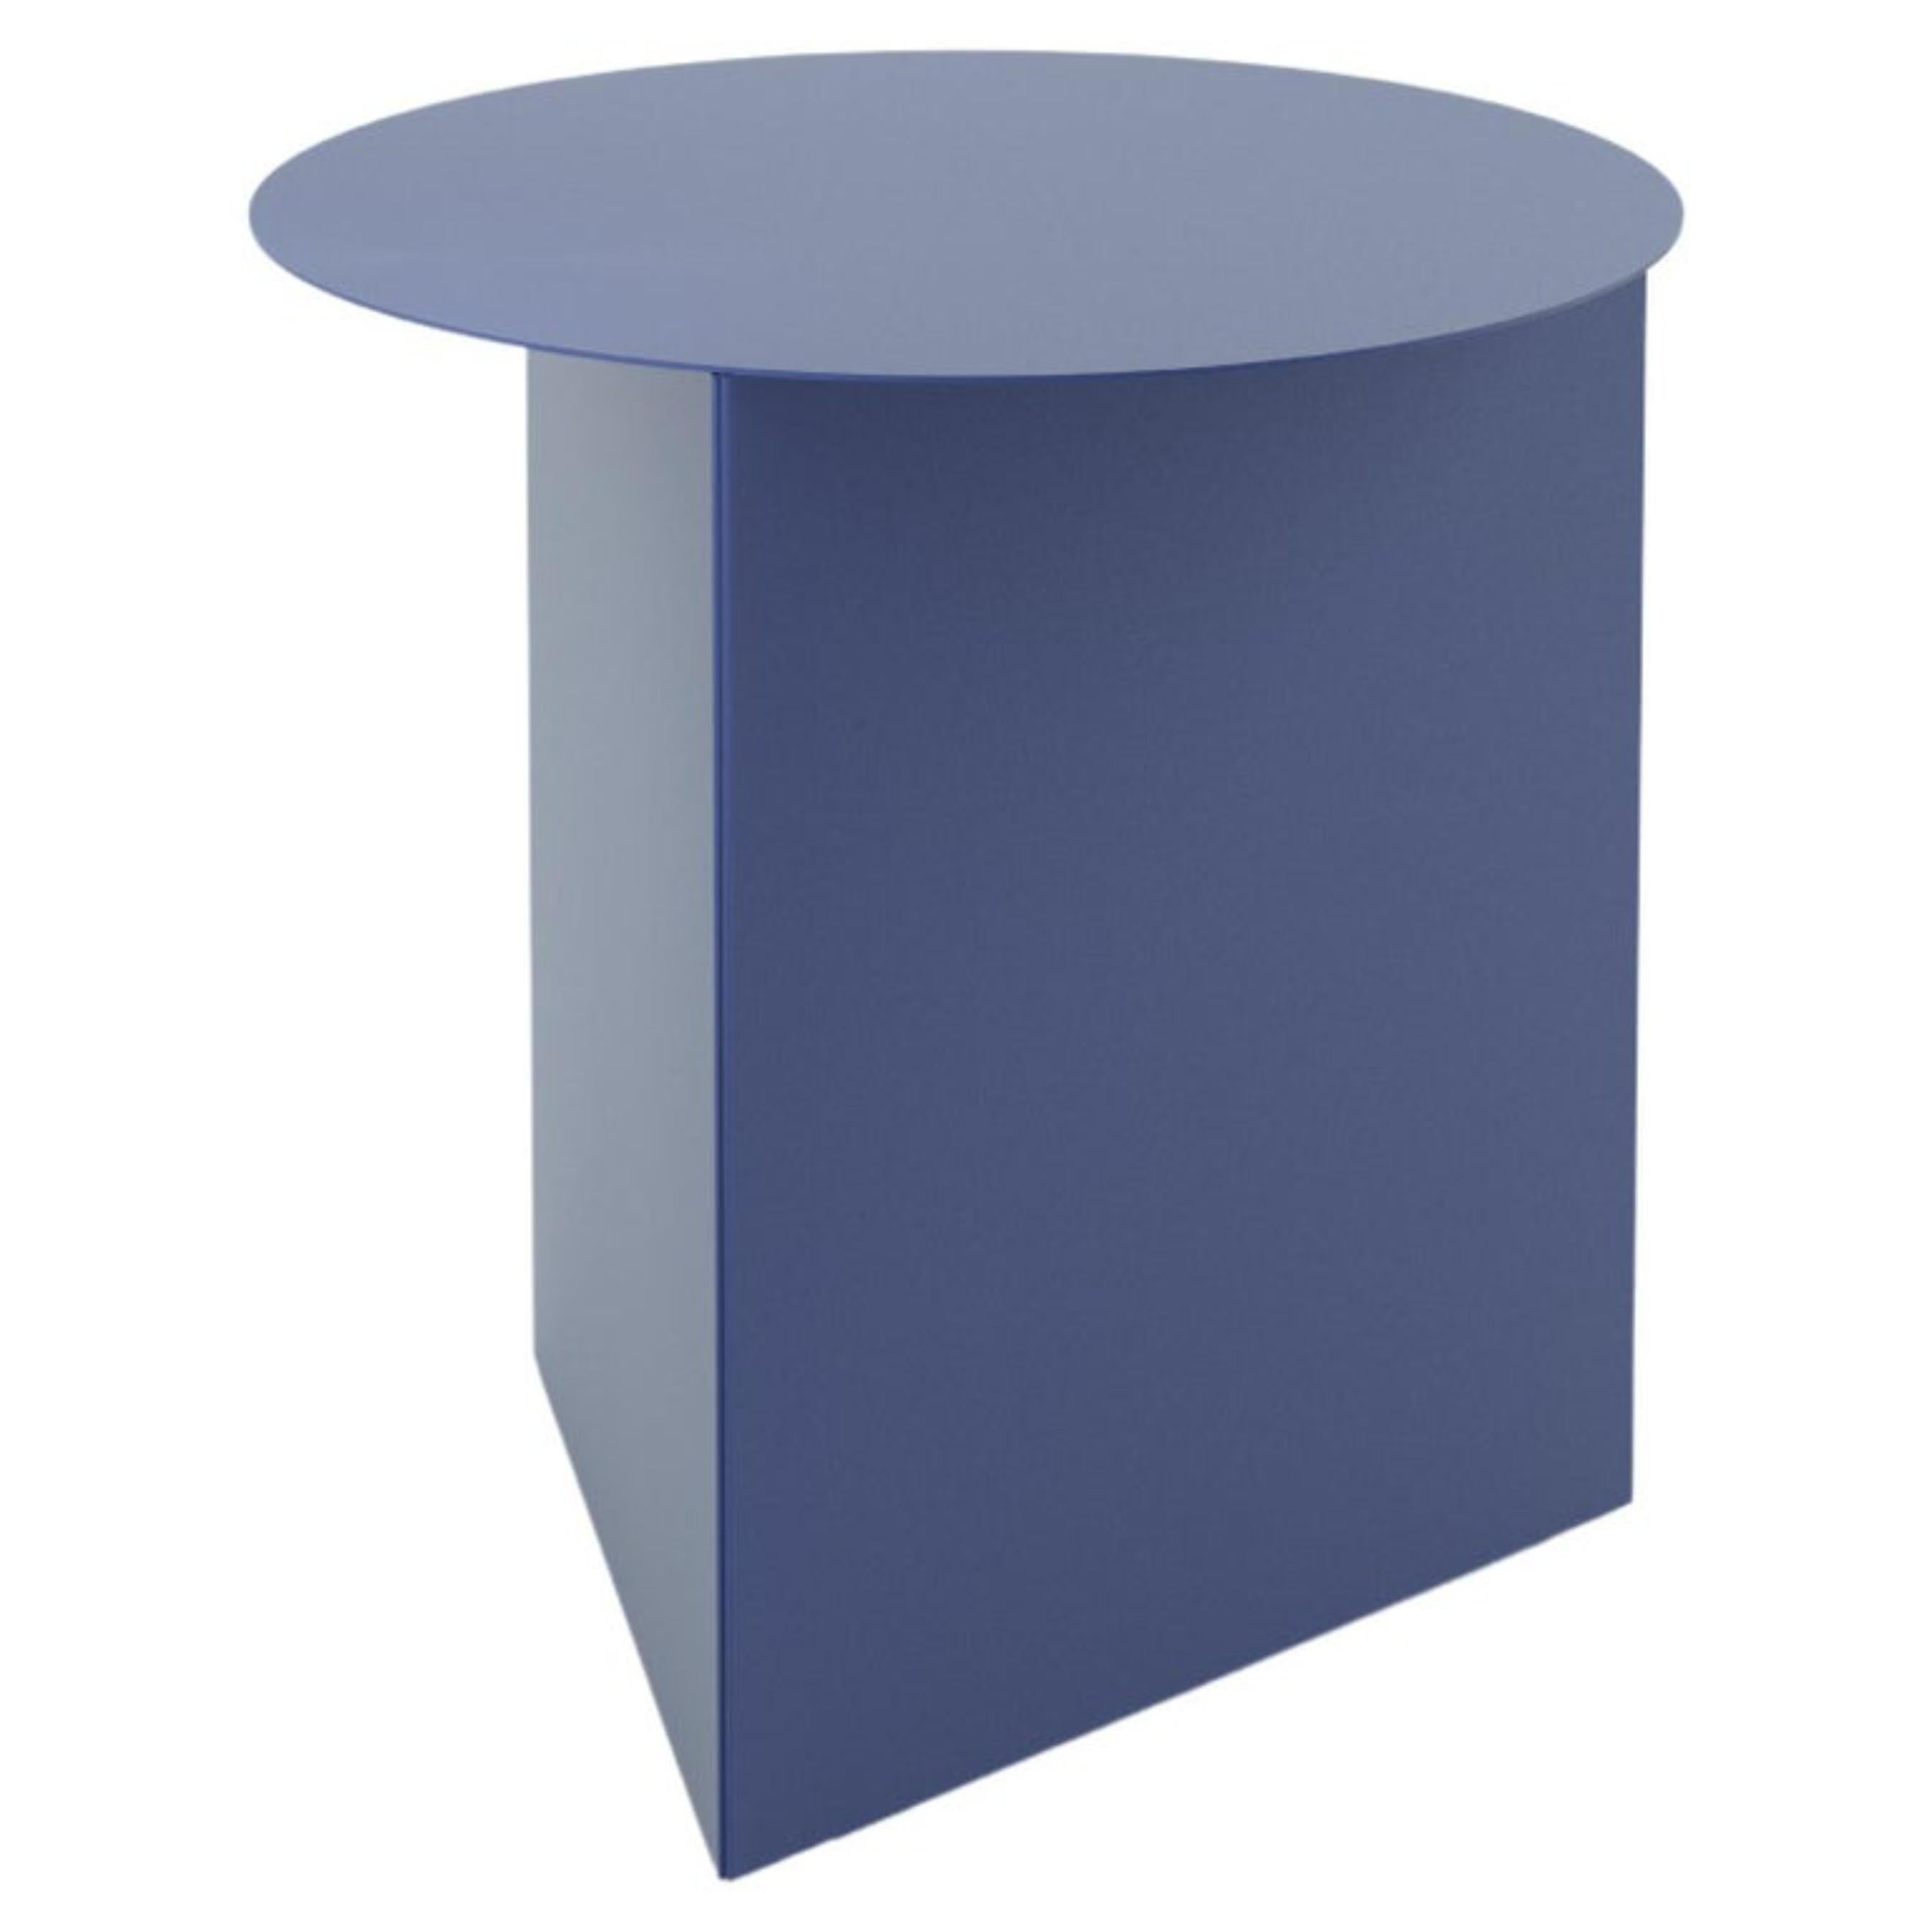 Steel Prisma tall 45 coffee table by Sebastian Scherer
Dimensions: D45x H45 cm
Materials: Steel.
Weight: 8 kg.
Also Available: Steel (matt): snow white / light sand / sun yellow / clay orange / rust red / navy blue / graphite grey / dark bronze /